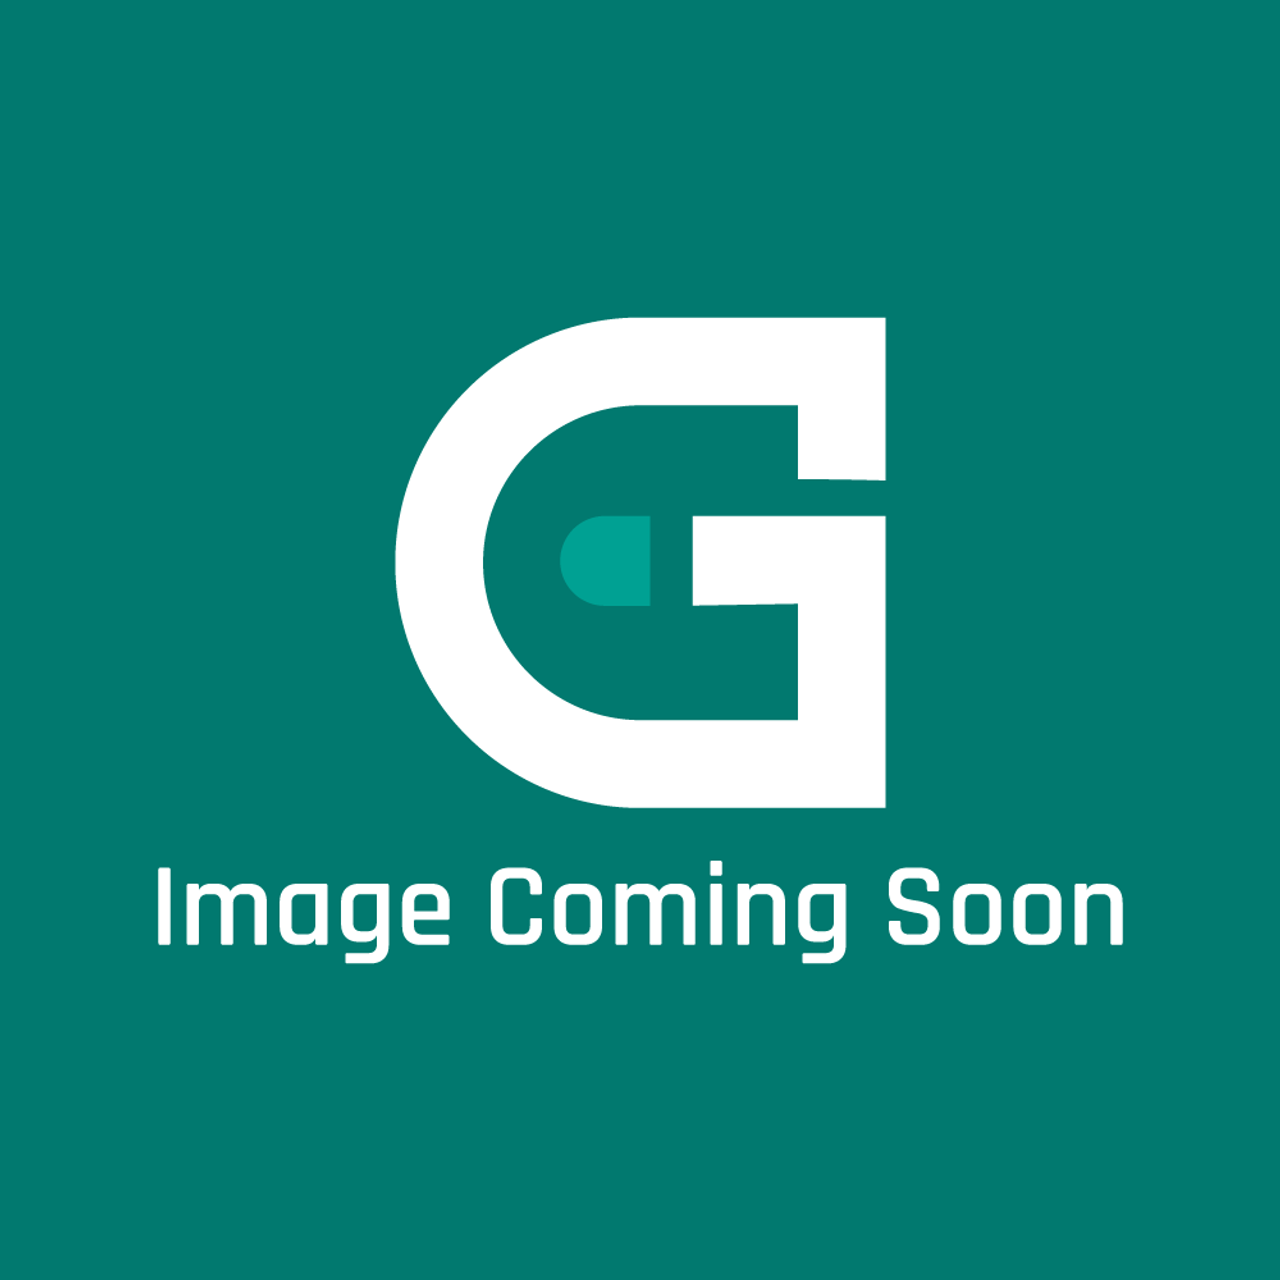 GE Appliances WB39X39038 - Slide Lh - Image Coming Soon!